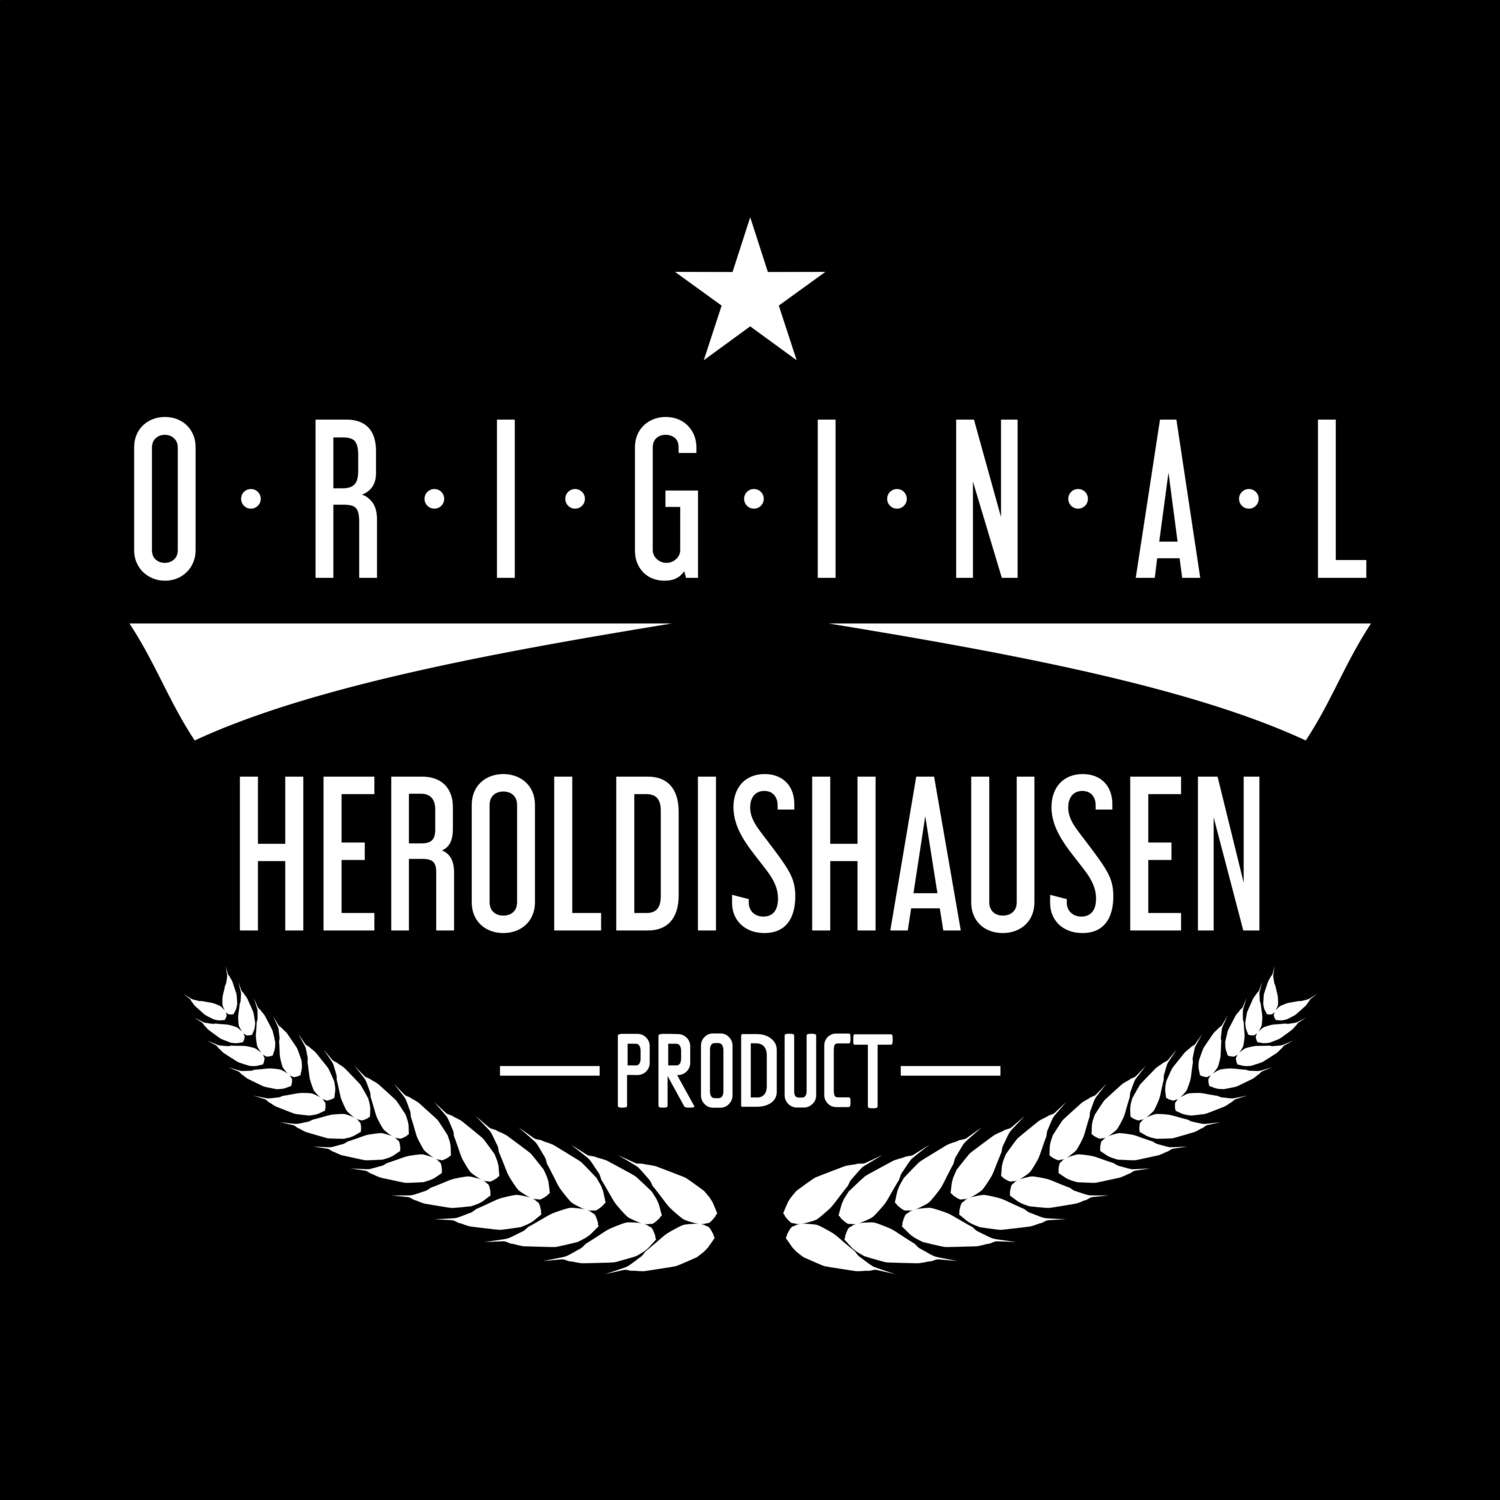 Heroldishausen T-Shirt »Original Product«